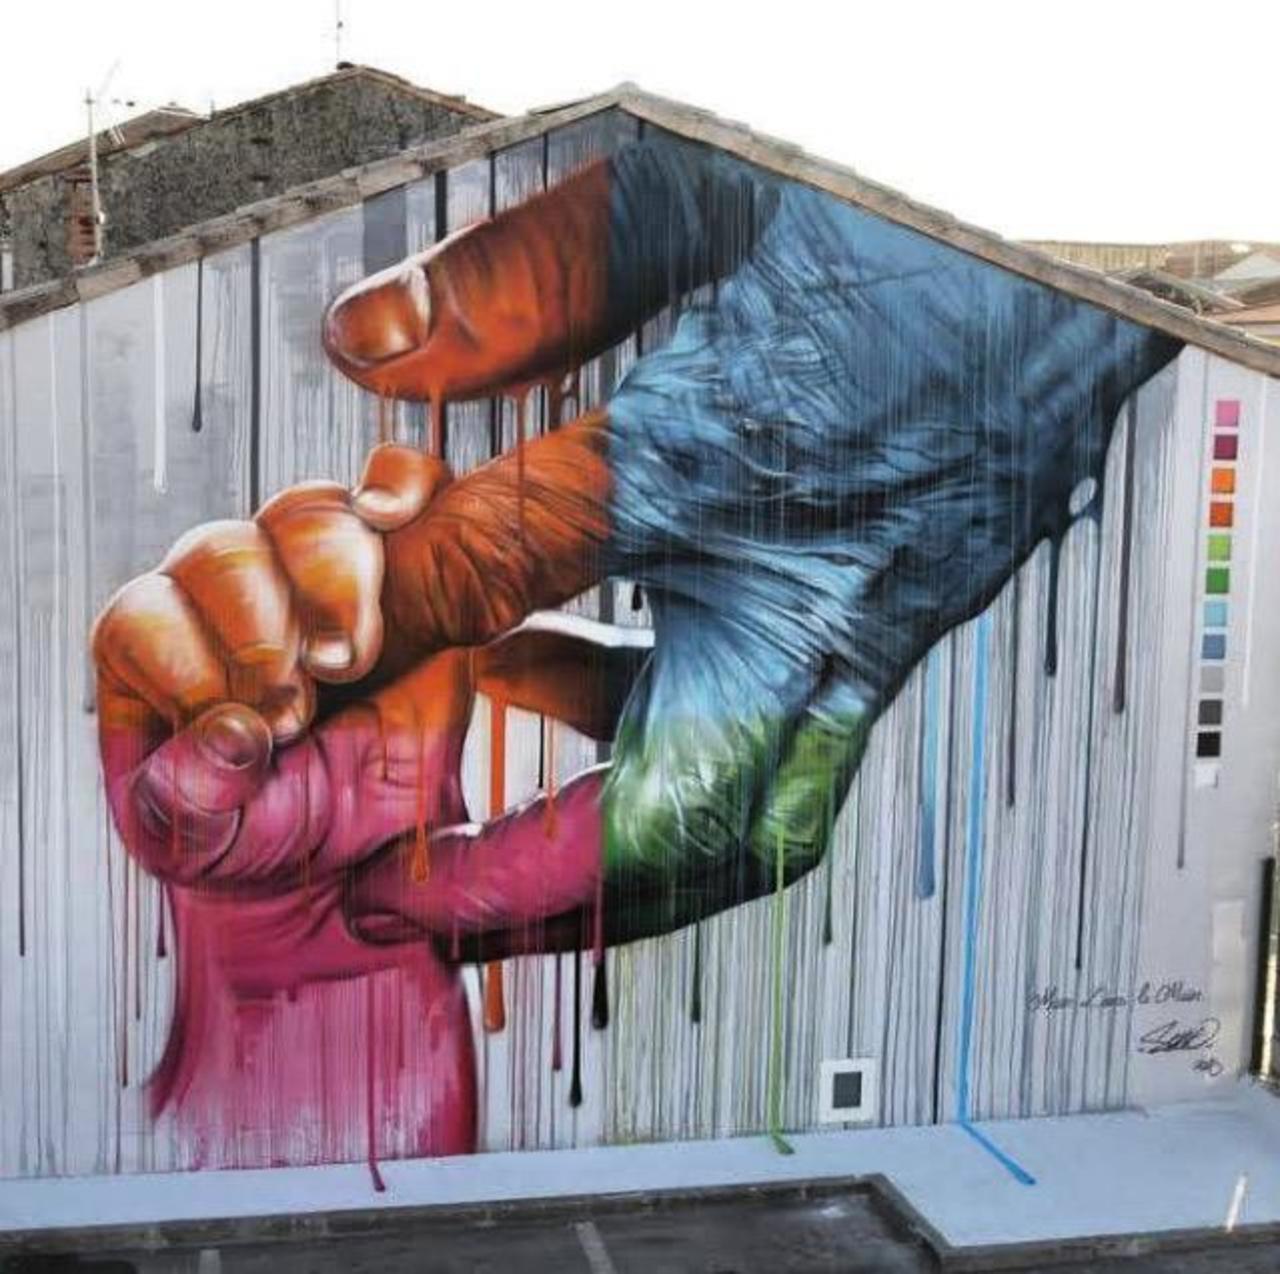 Seno Street Art 

#art #graffiti #mural #streetart http://t.co/nBkttw0Qby